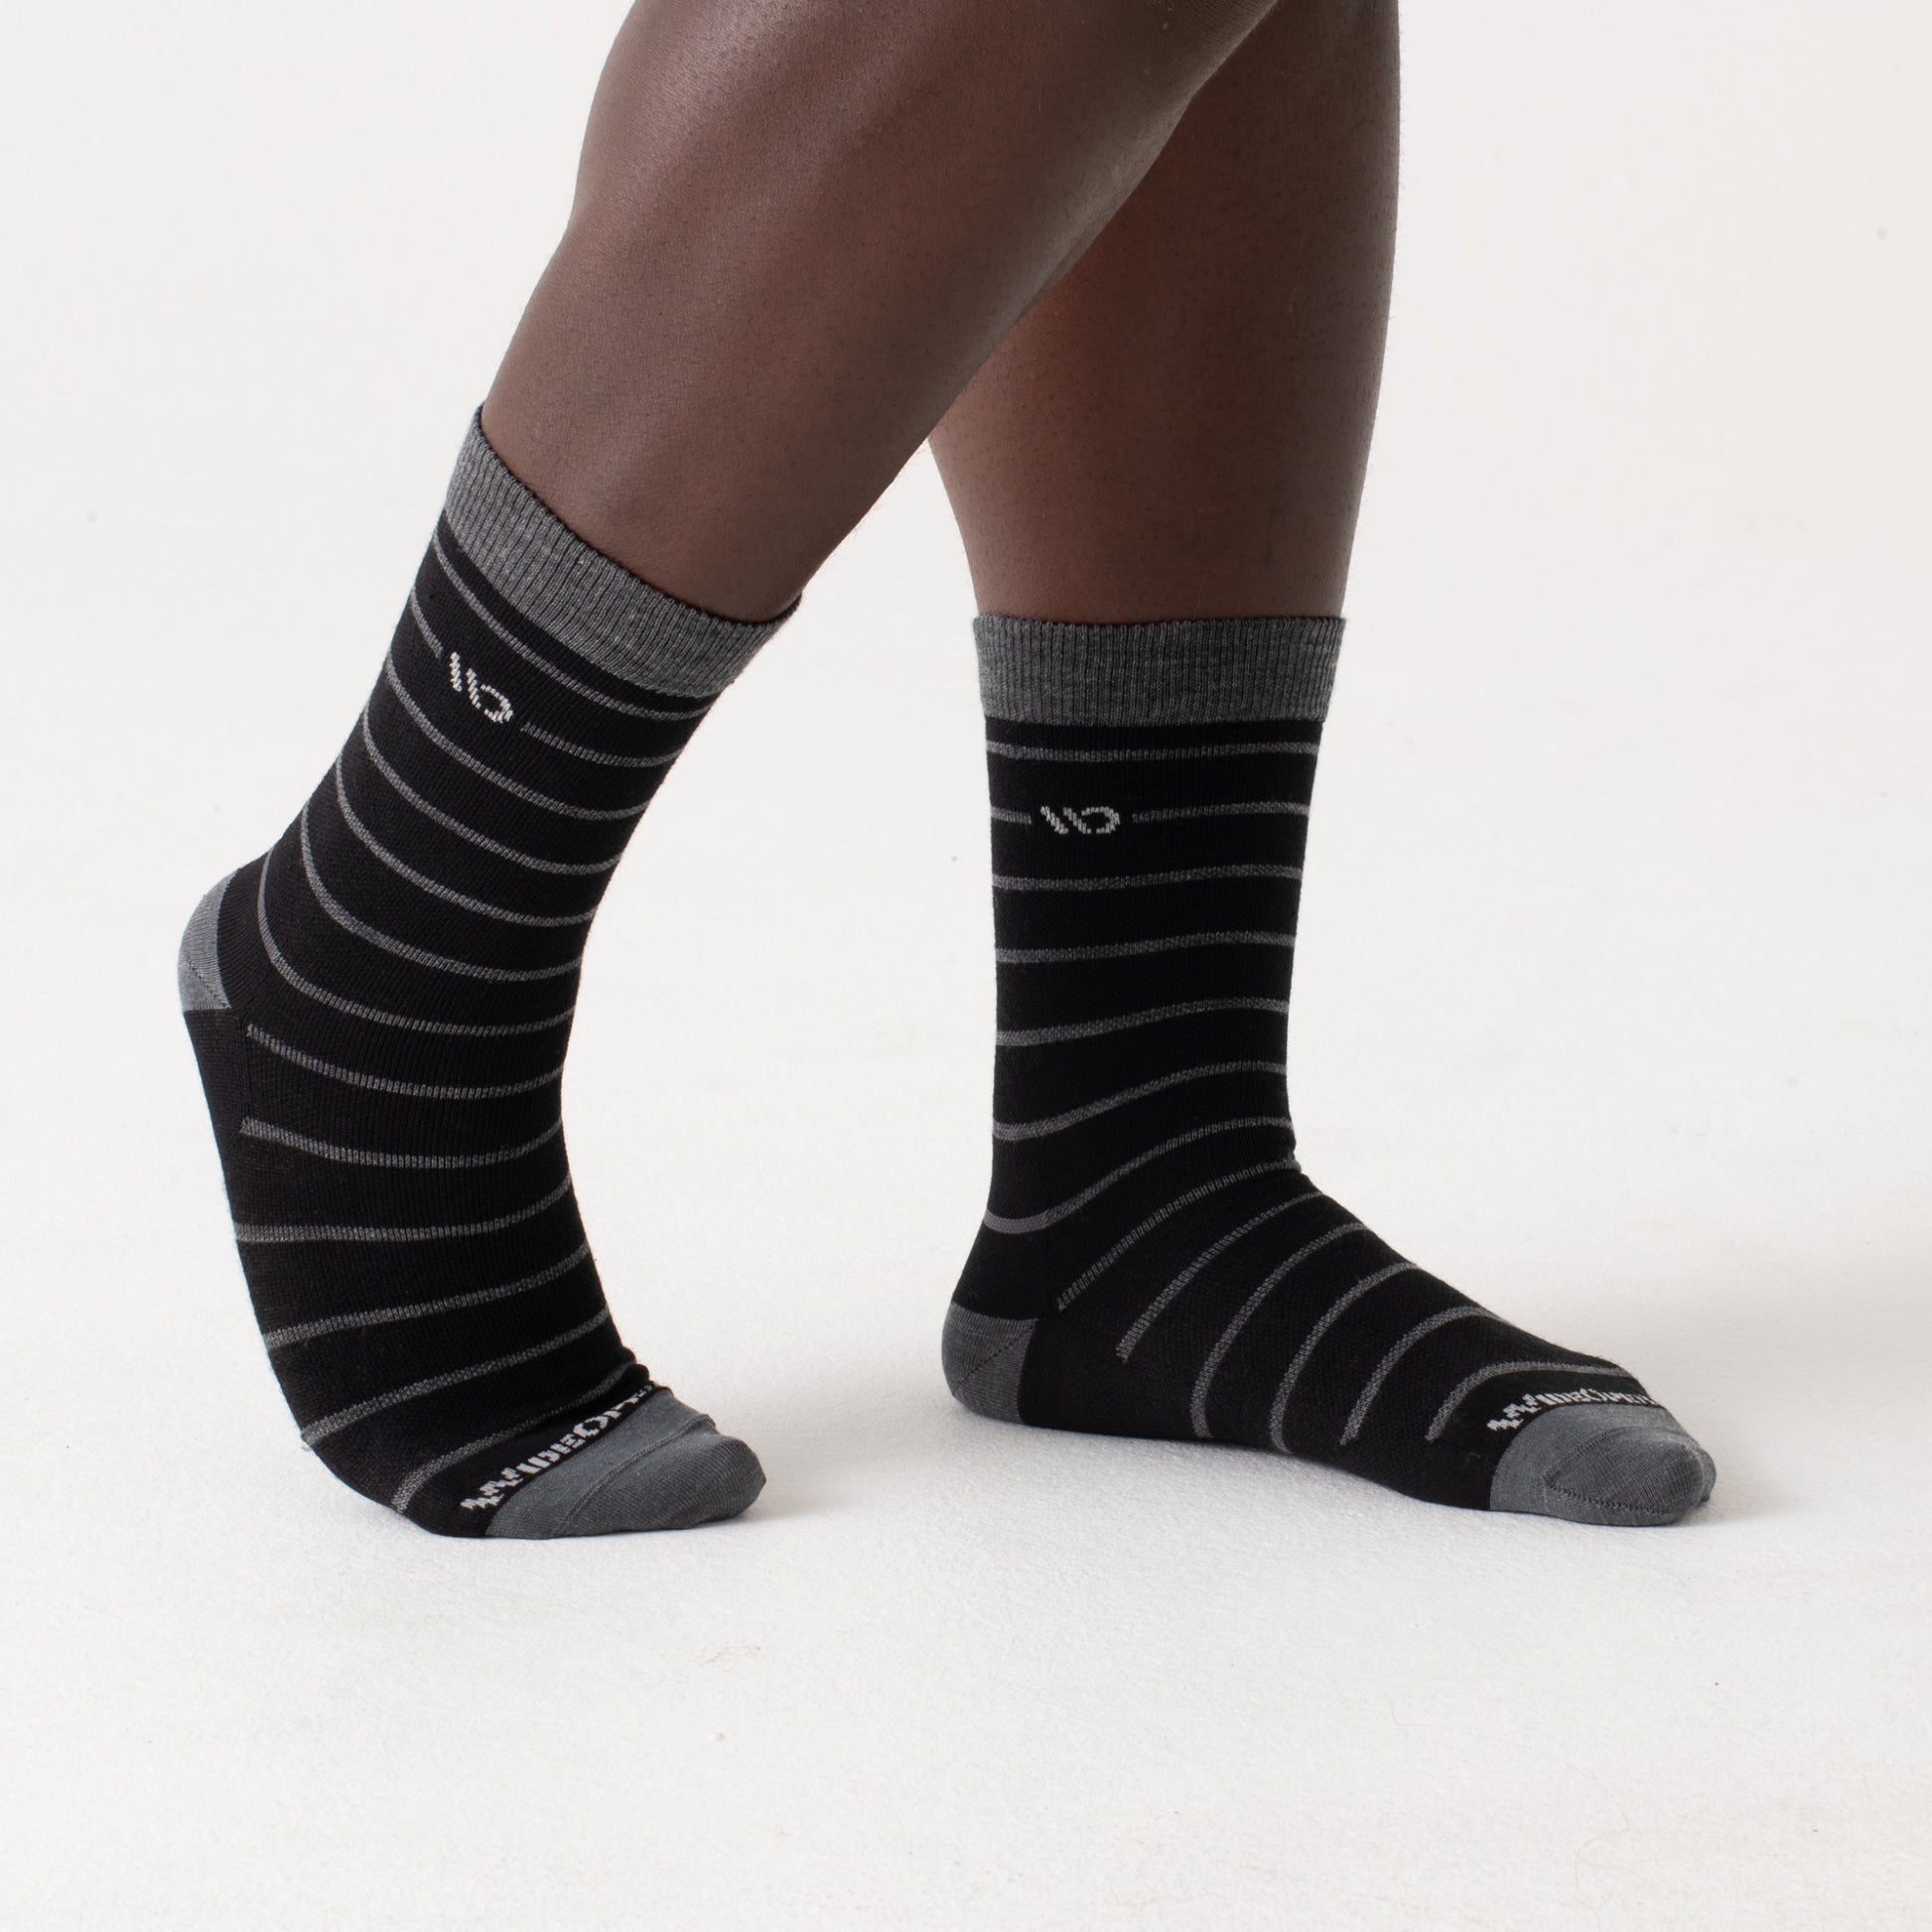 On body Black Crew sock, gray heel/toe, white logo, black body and gray stripes--Black